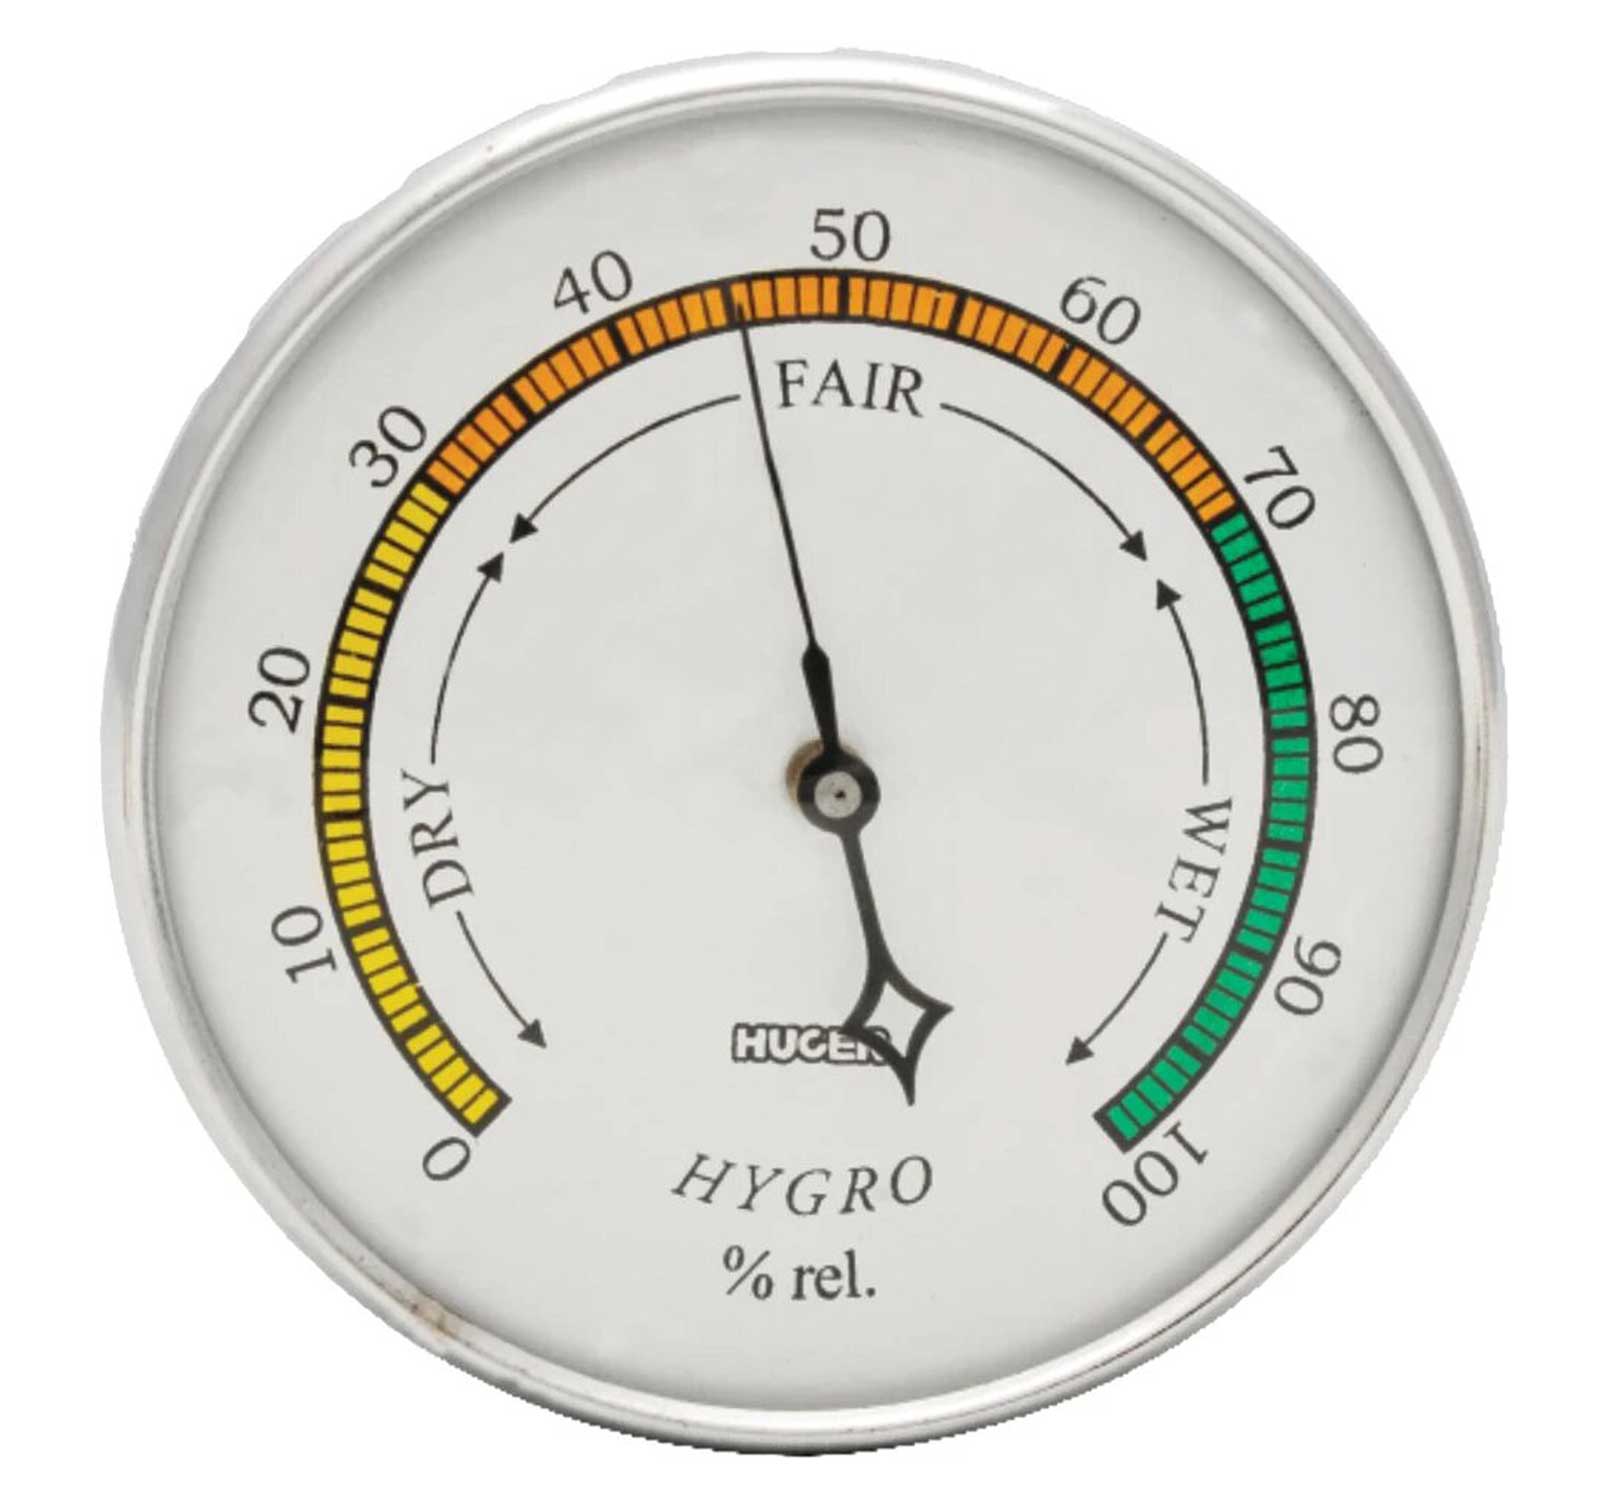 Hair Hygrometer - Meteorology, Physics Supplies